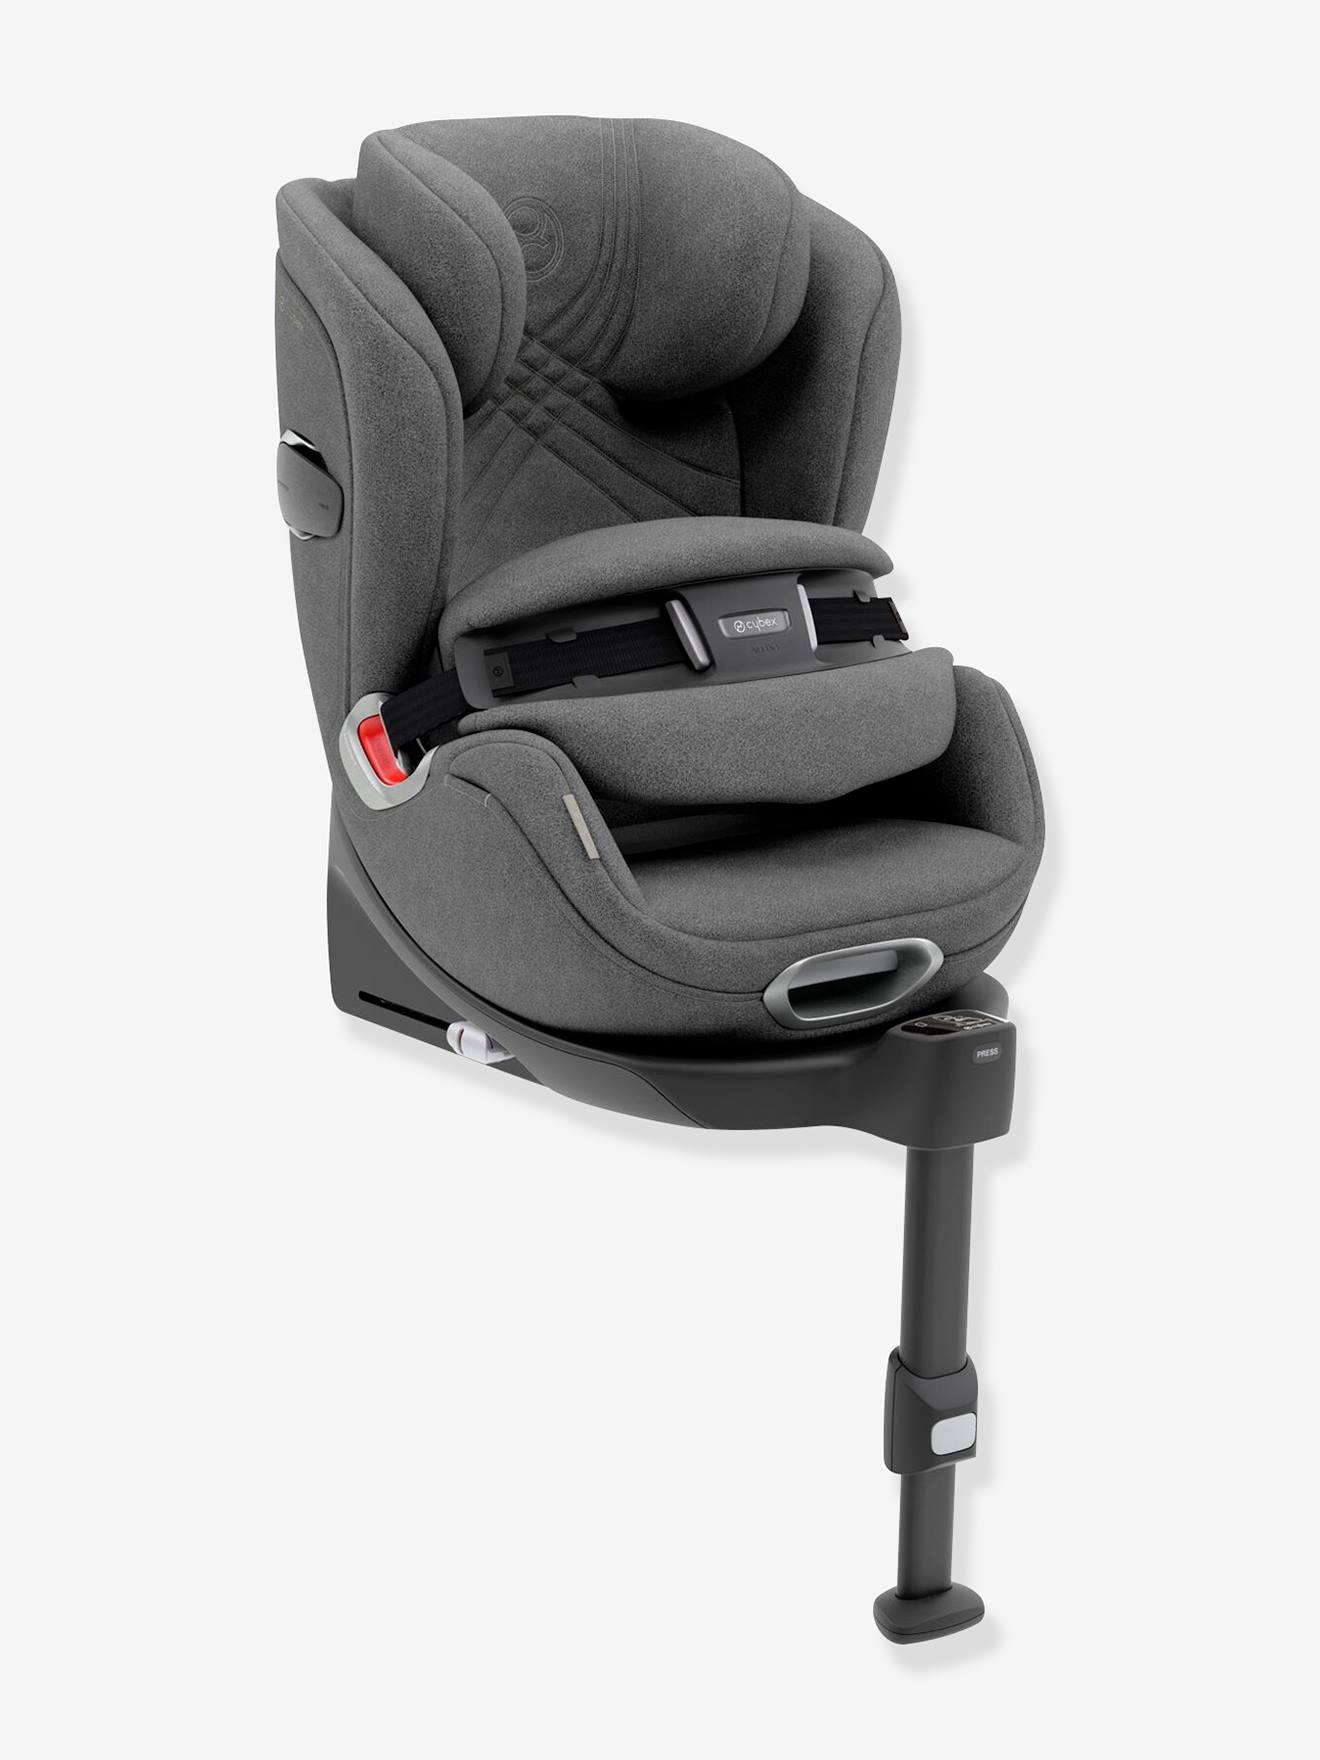 Autostoel CYBEX Platinum Anoris T i-Size, 75 à 115 cm, gelijjk aan groep 1/2 donkergrijs (soho grey)